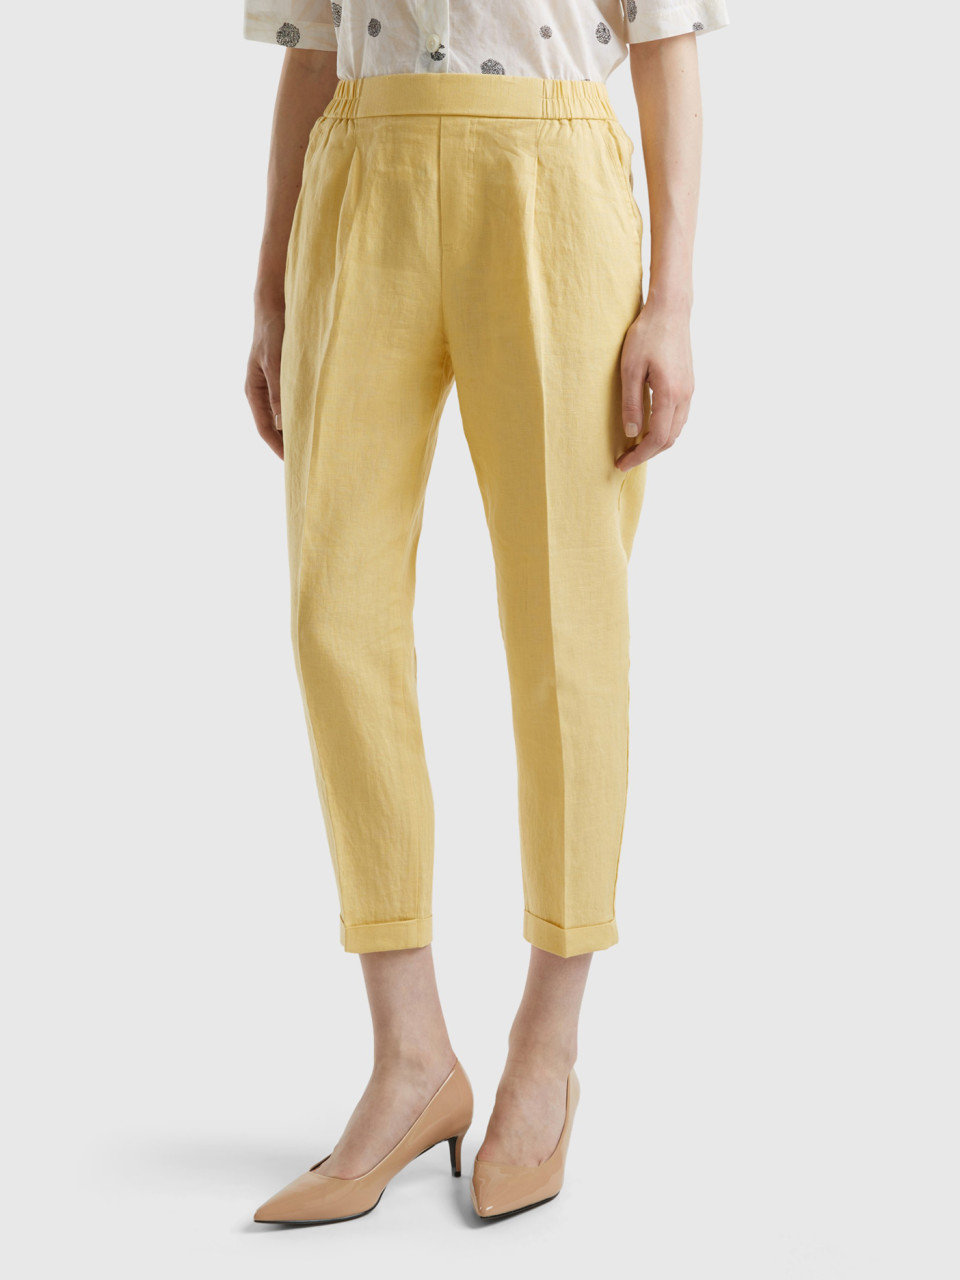 Benetton, Cropped Trousers In 100% Linen, Yellow, Women